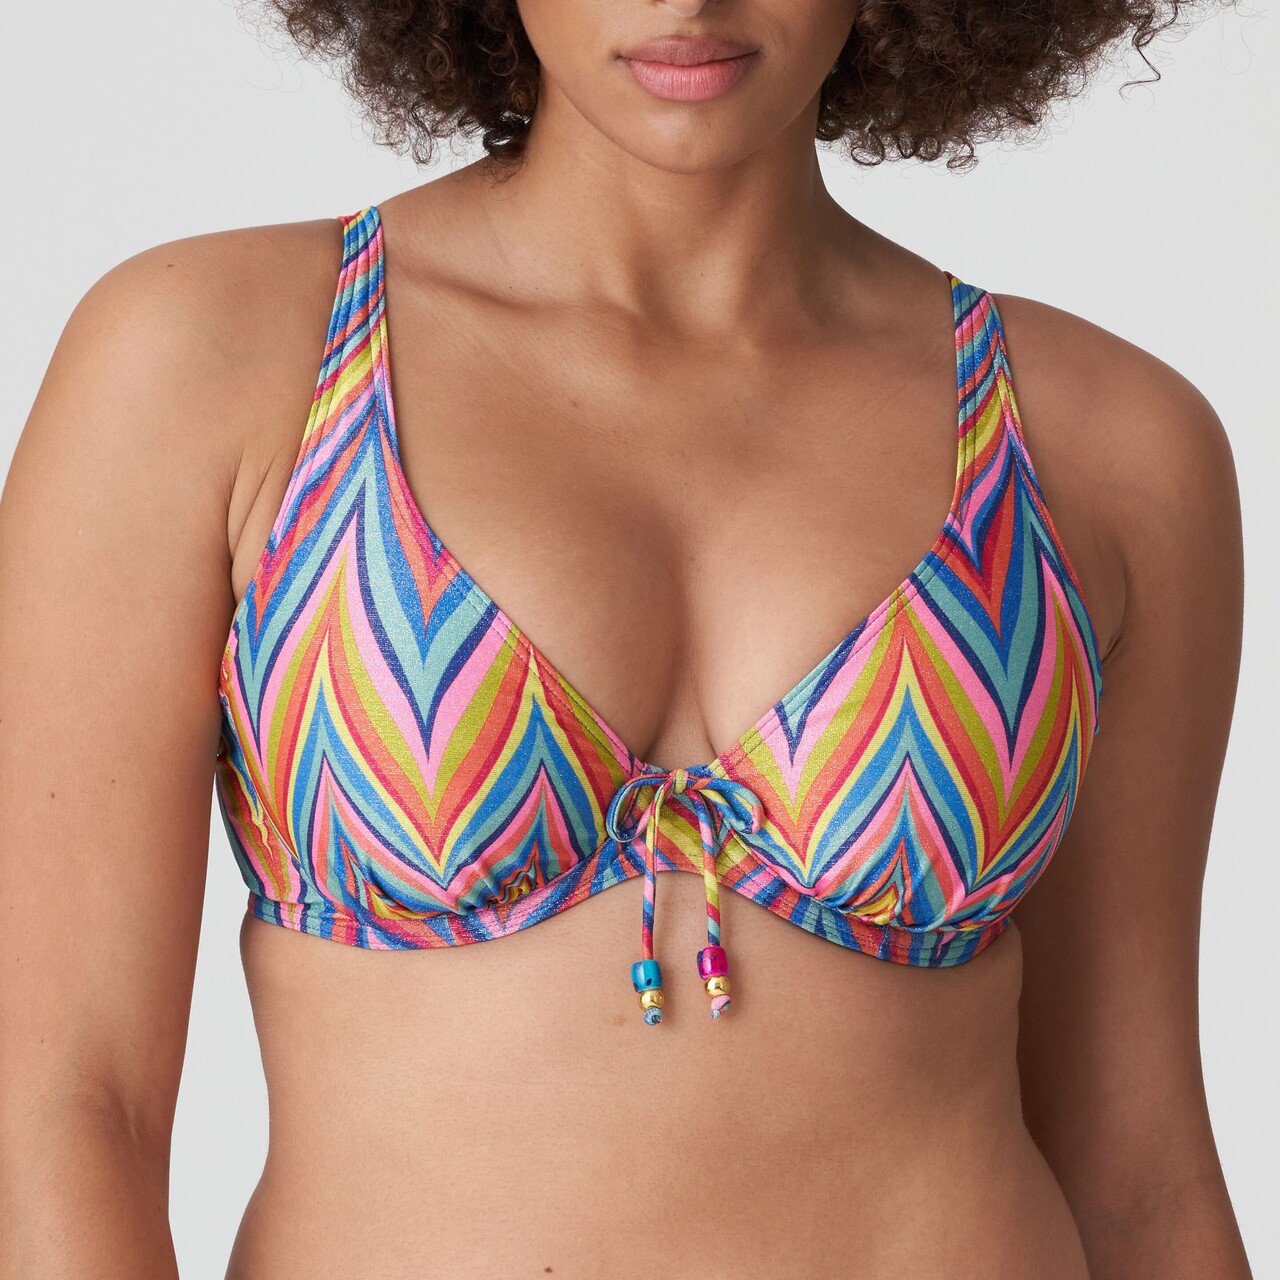 Primadonna Swim Kea Bikini Top Rbp, Farve: Rainbow Paradise, Størrelse: 75G, Dame